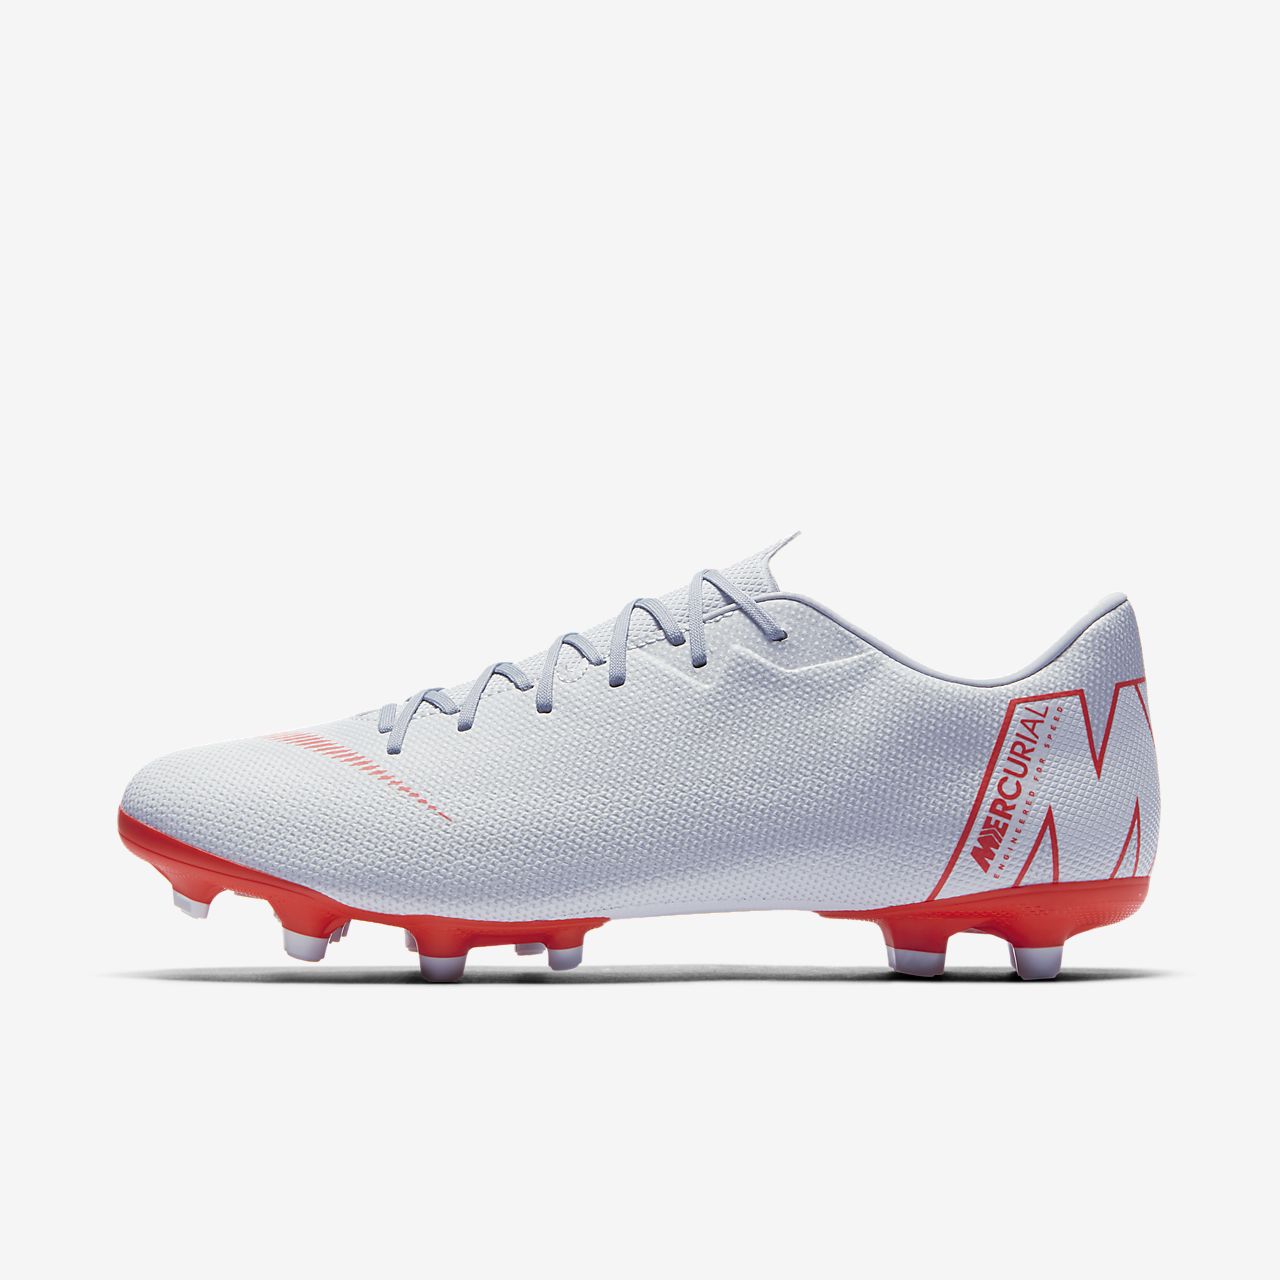 Nike Mercurial Vapor XI FG Soccer Cleats Style 831958 401